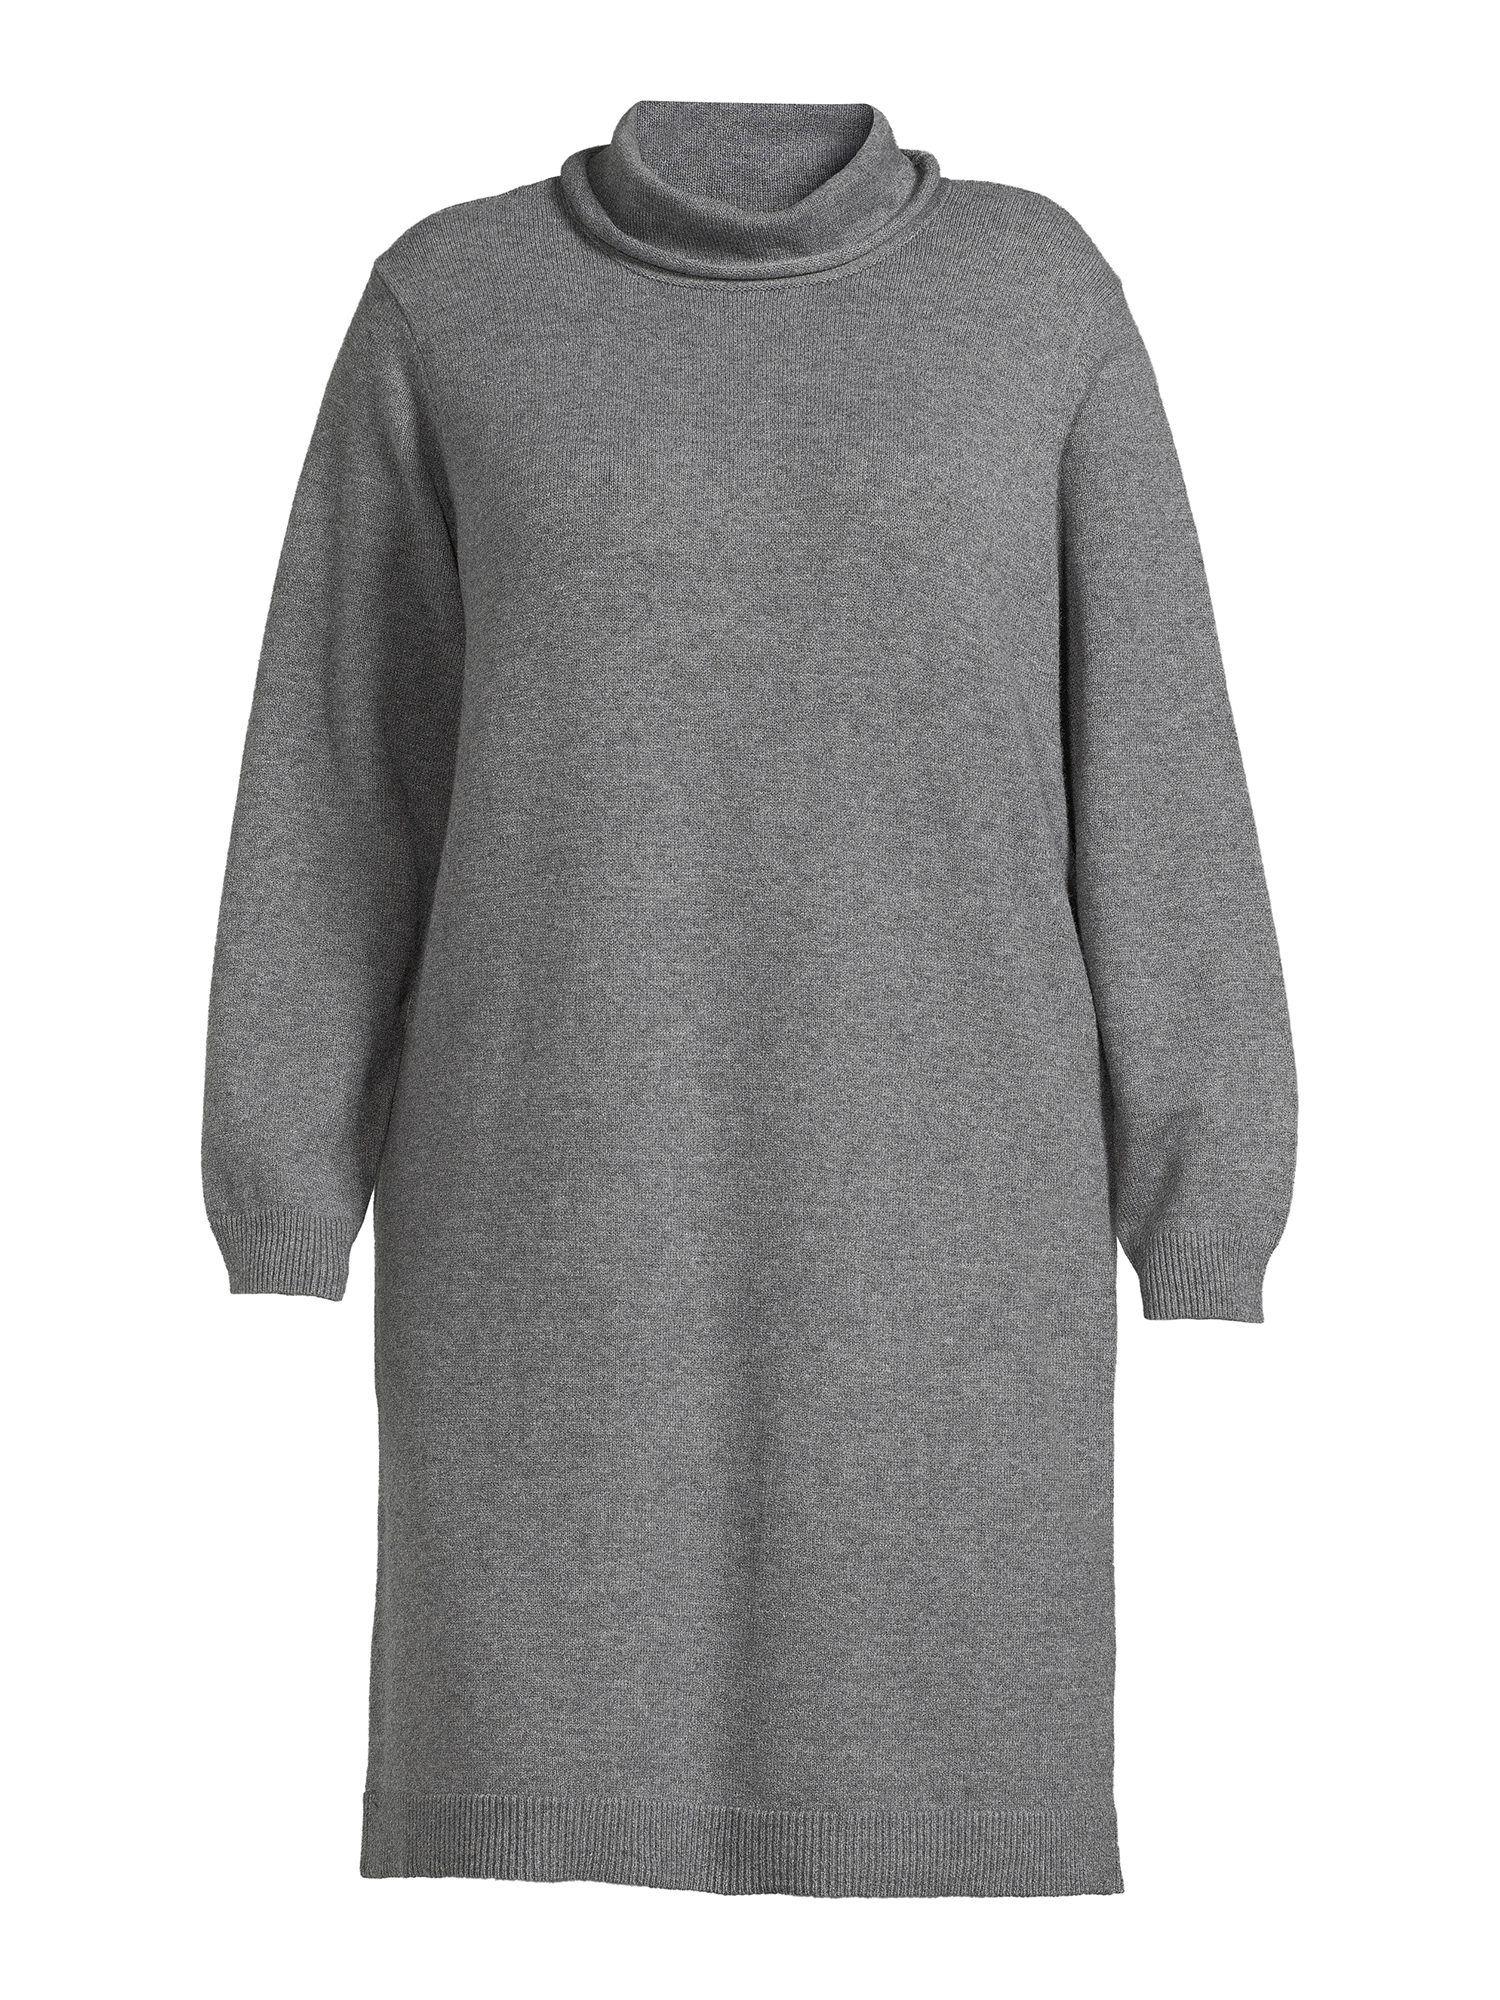 Terra & Sky Women's Plus Size Turtleneck Tunic Length Sweater Dress - image 5 of 5